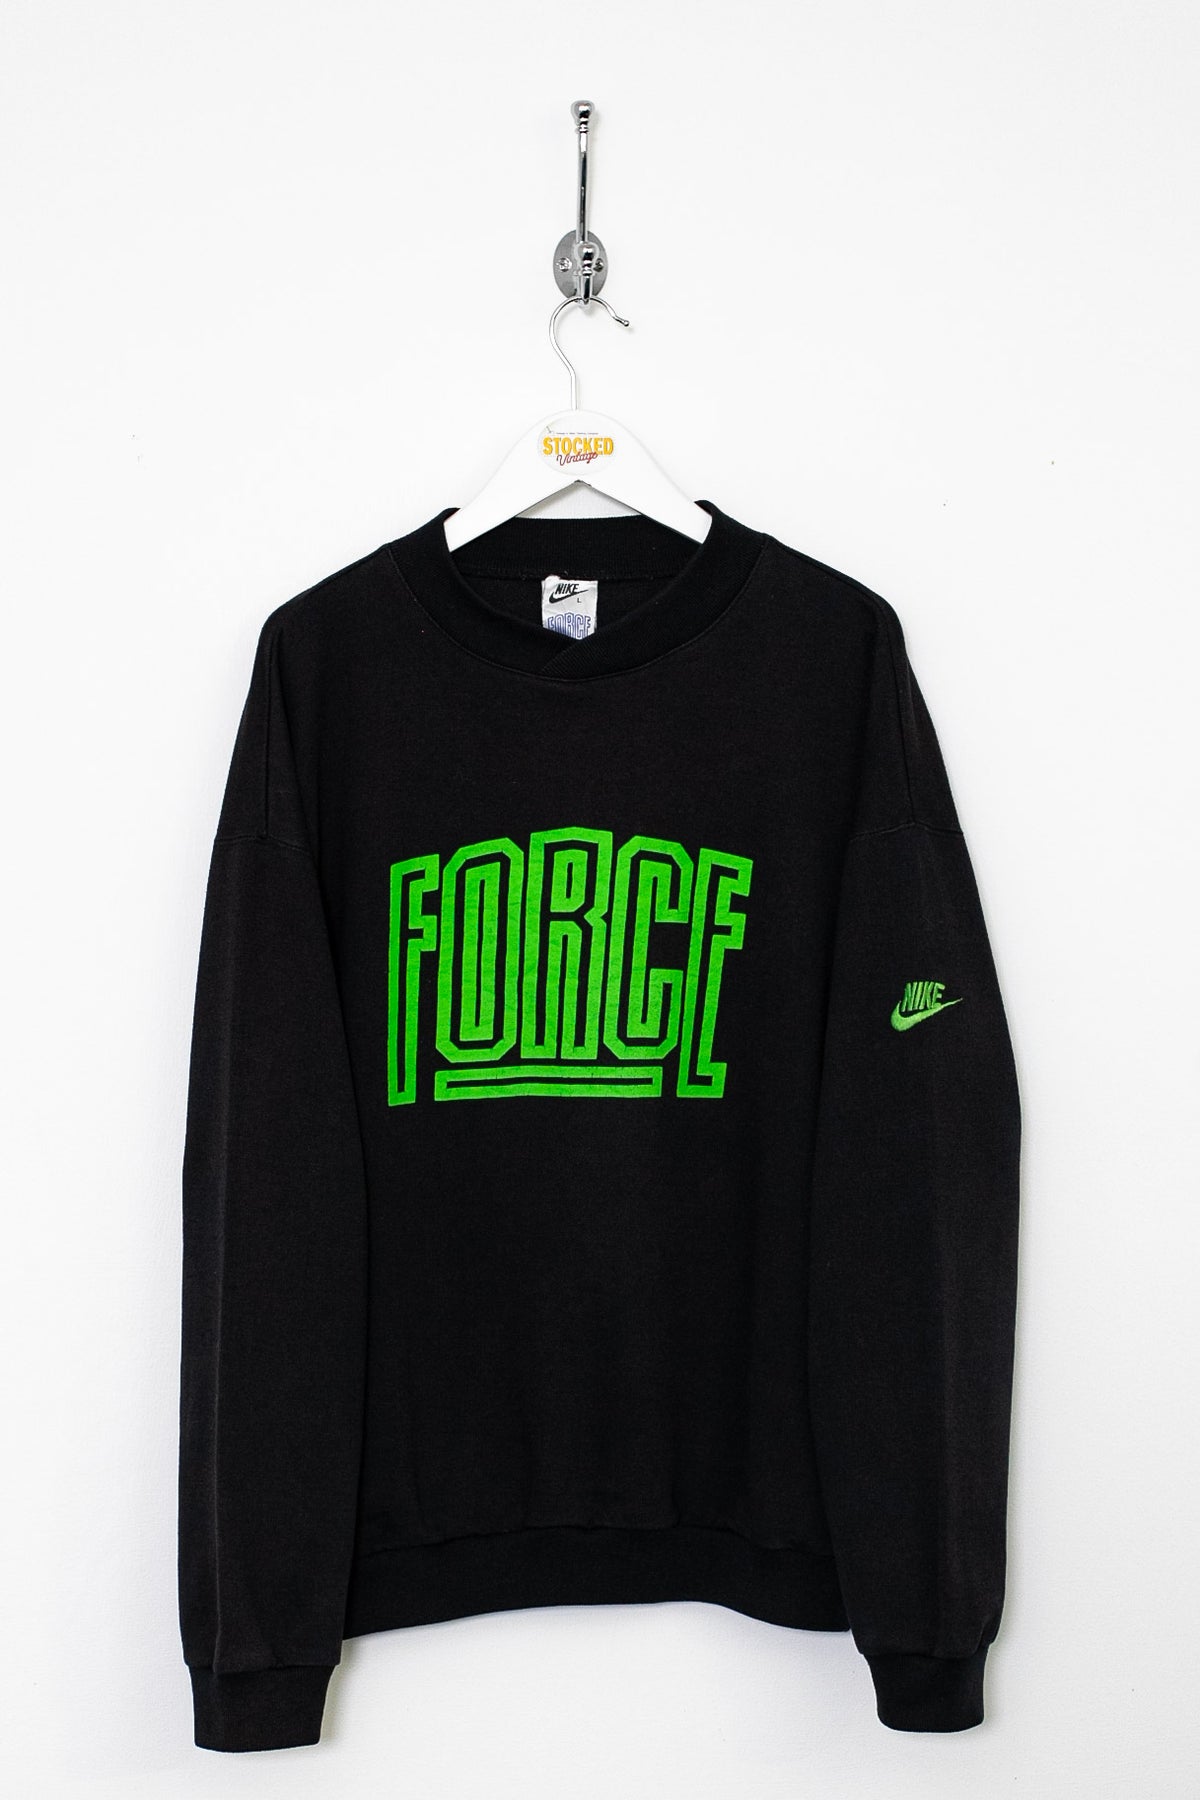 90s Nike Force Sweatshirt (M)